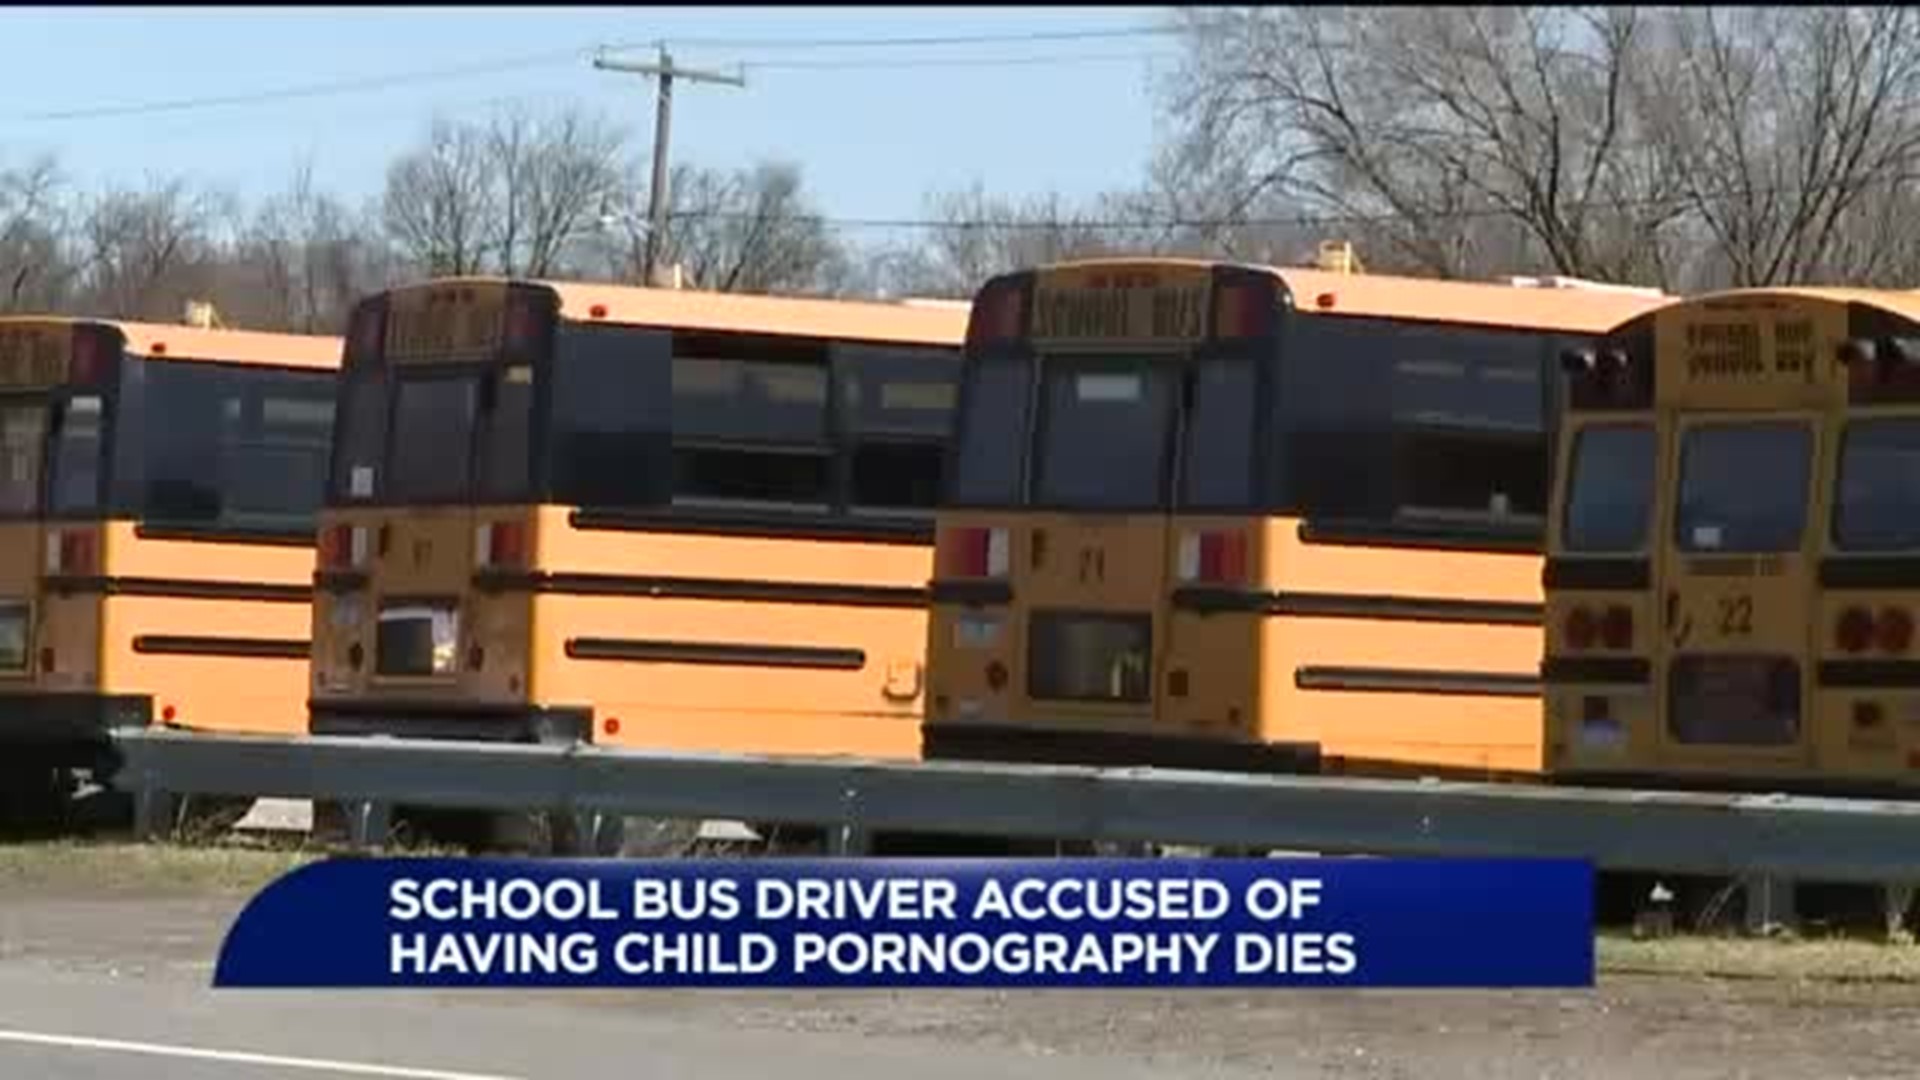 School Bus Driver Accused of Having Child Pornography Dies